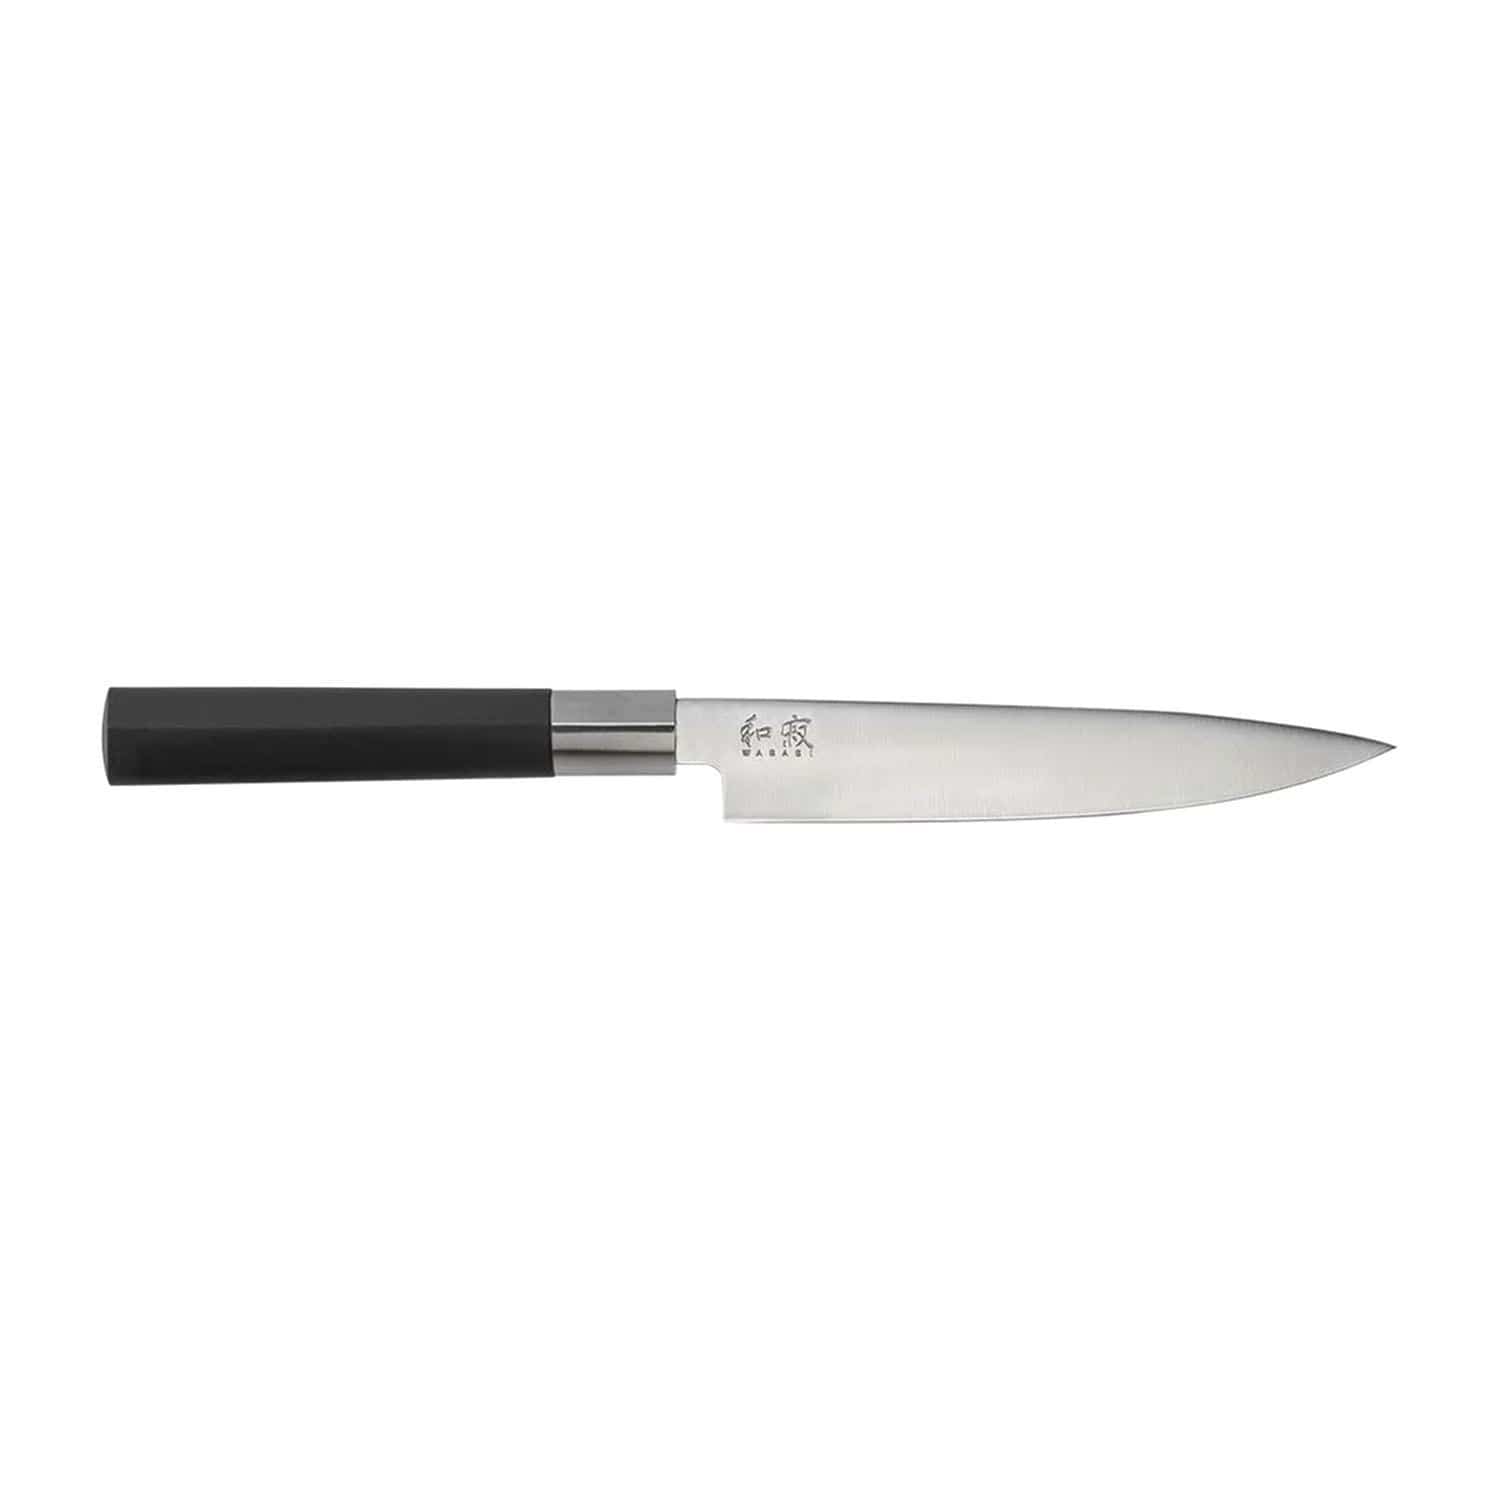 Kai Wasabi 6 Utility Knife - Black, 15 cm - 6715U - Jashanmal Home